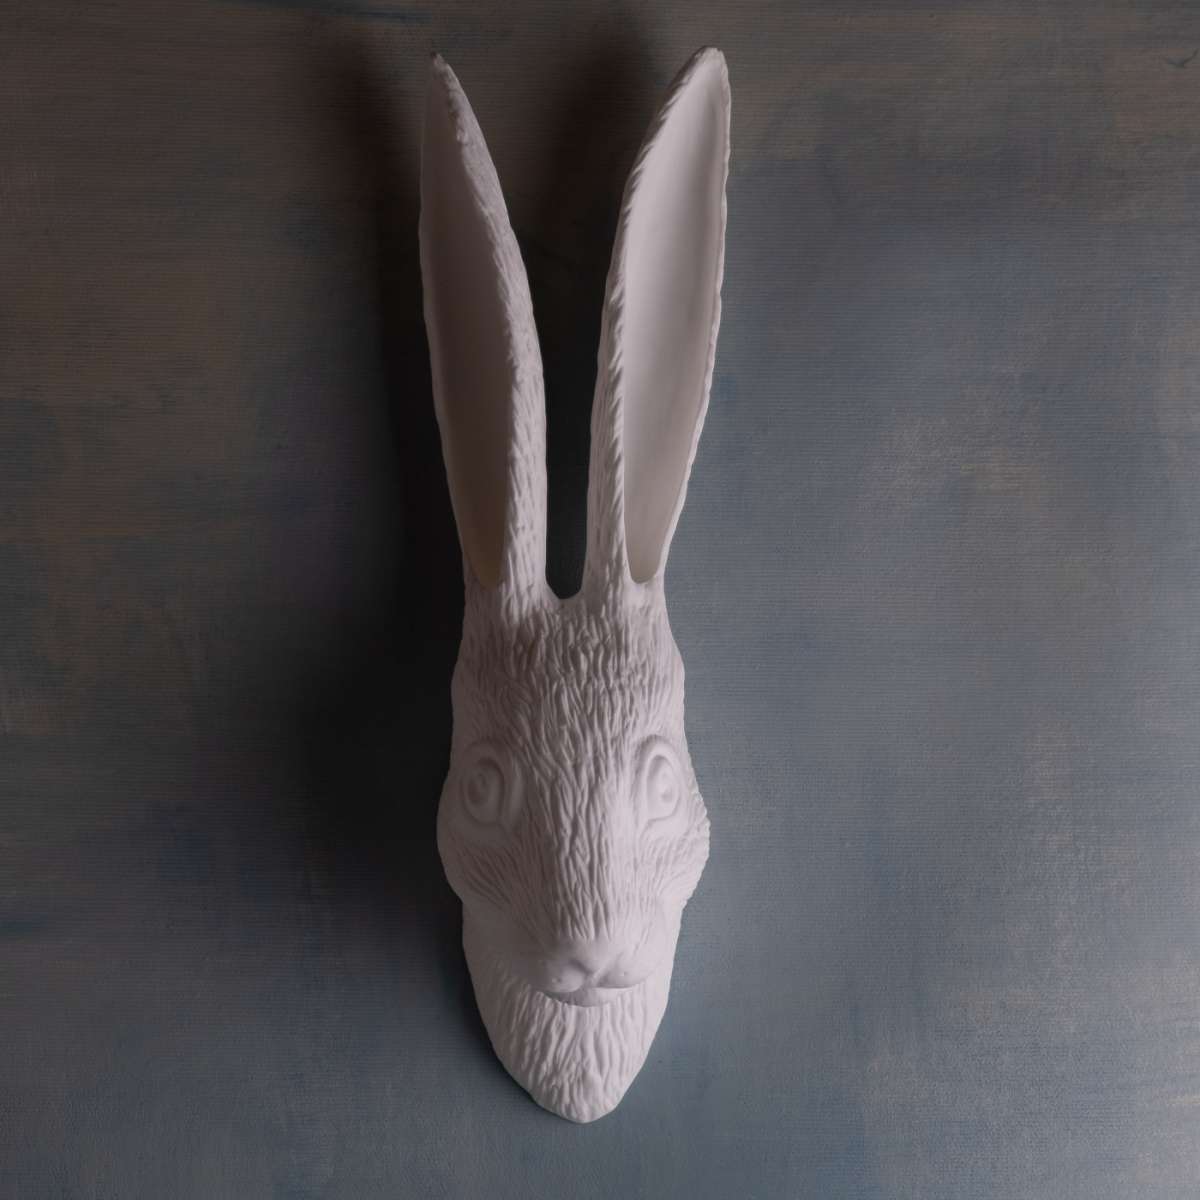 Klatt objects GmbH wall vase rabbit "herr kowalksi" - white bone china